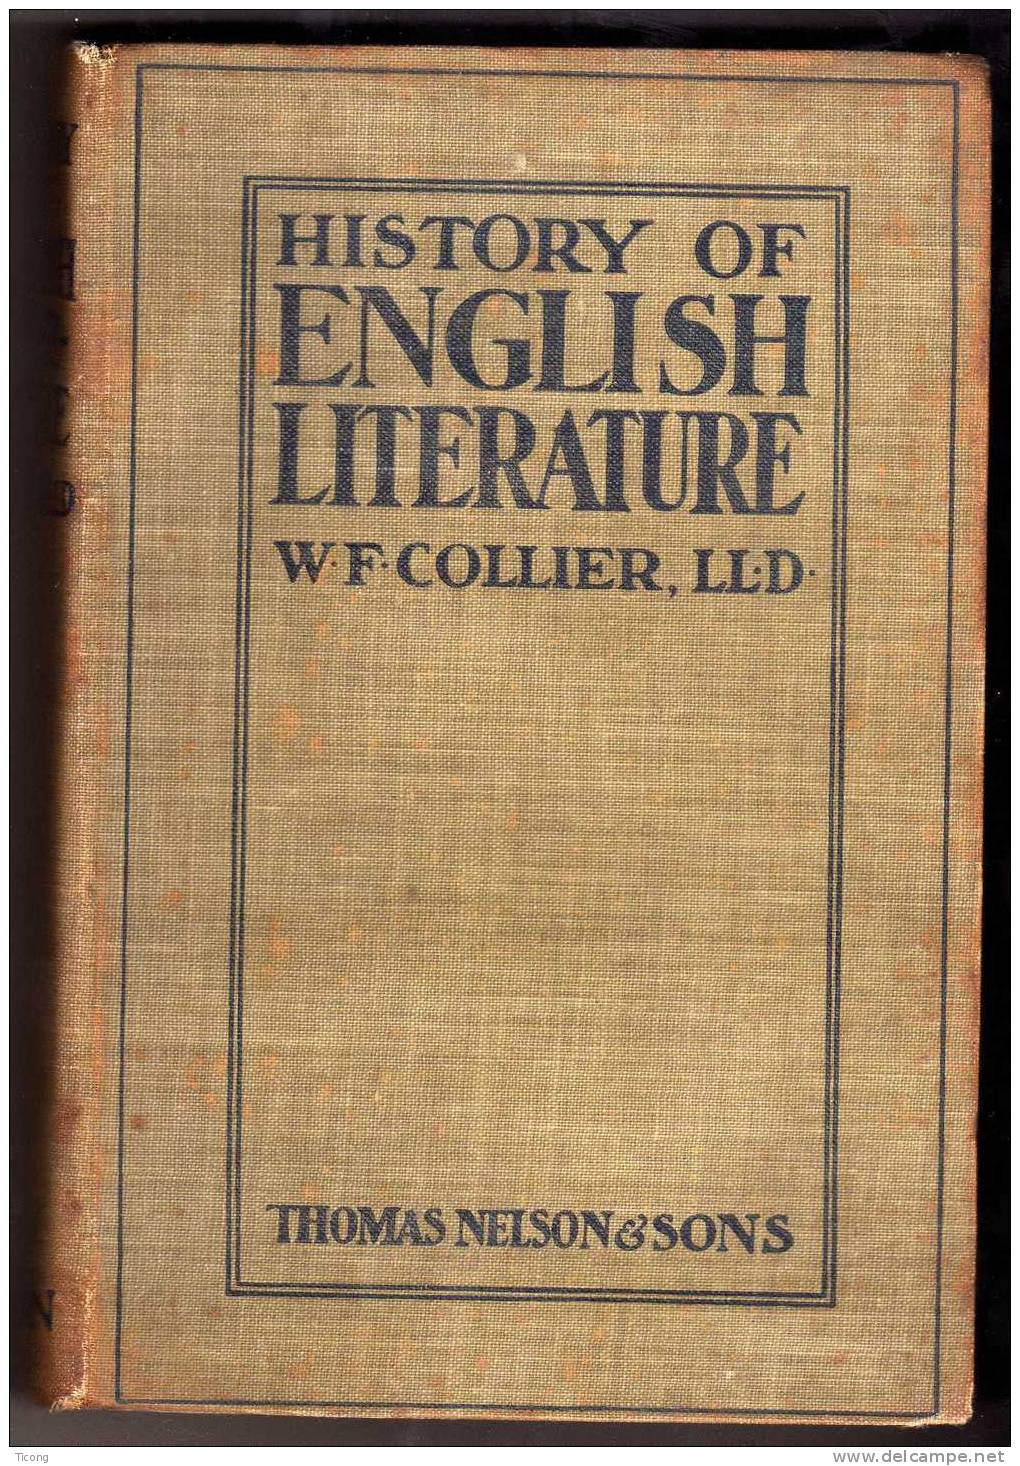 HISTORY OF ENGLISH LITERATURE - W F COLLIER LL D- THOMAS NELSON SONS - HISTOIRE DE LA LITTERATURE ANGLAISE 1912 - Anthologies